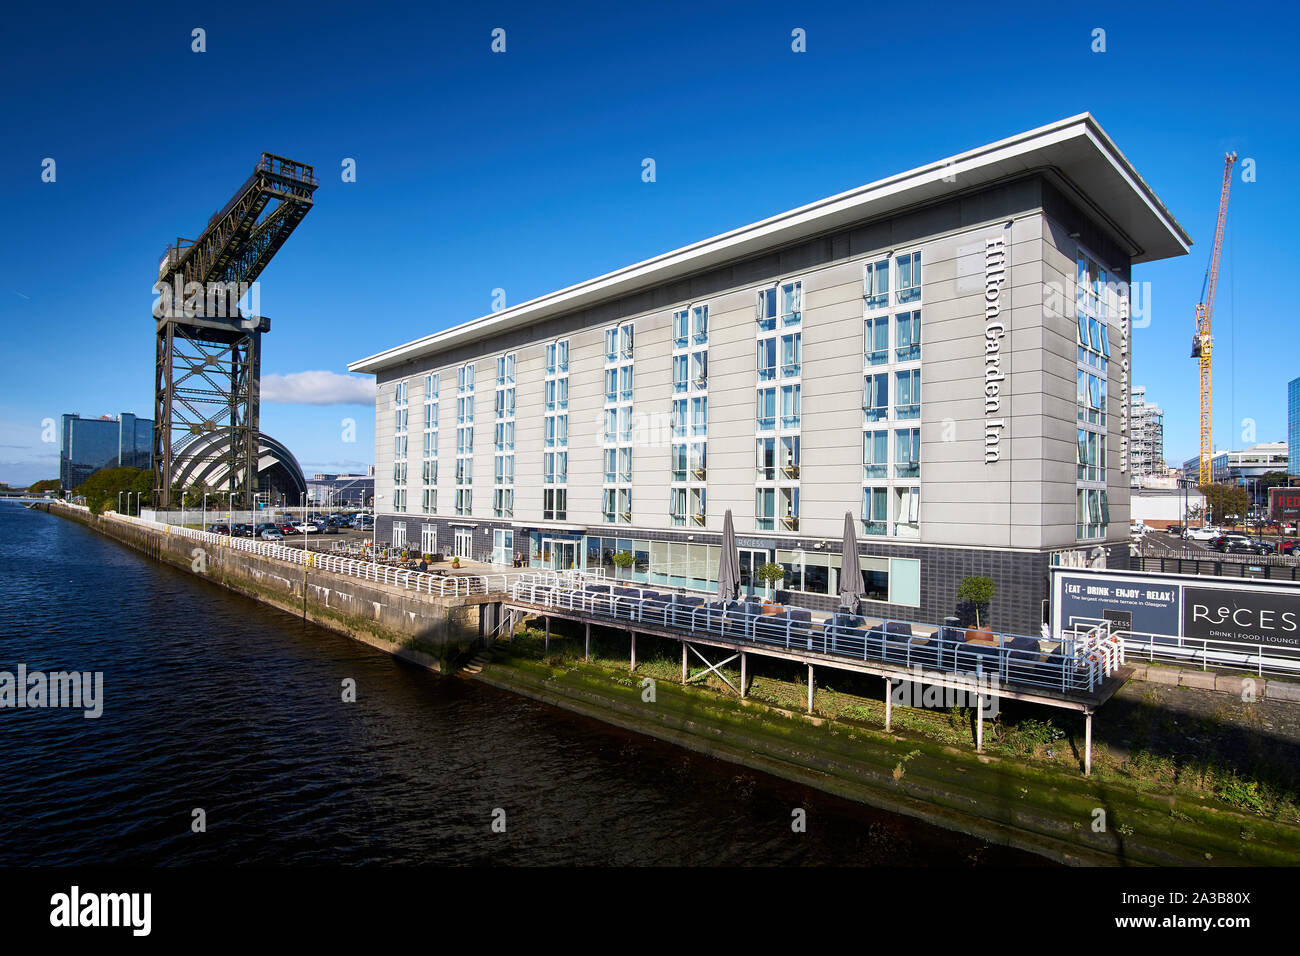 Hilton Garden Inn over the river Clyde and an old Finnieston Crane in Glasgow, Scotland Stock Photo